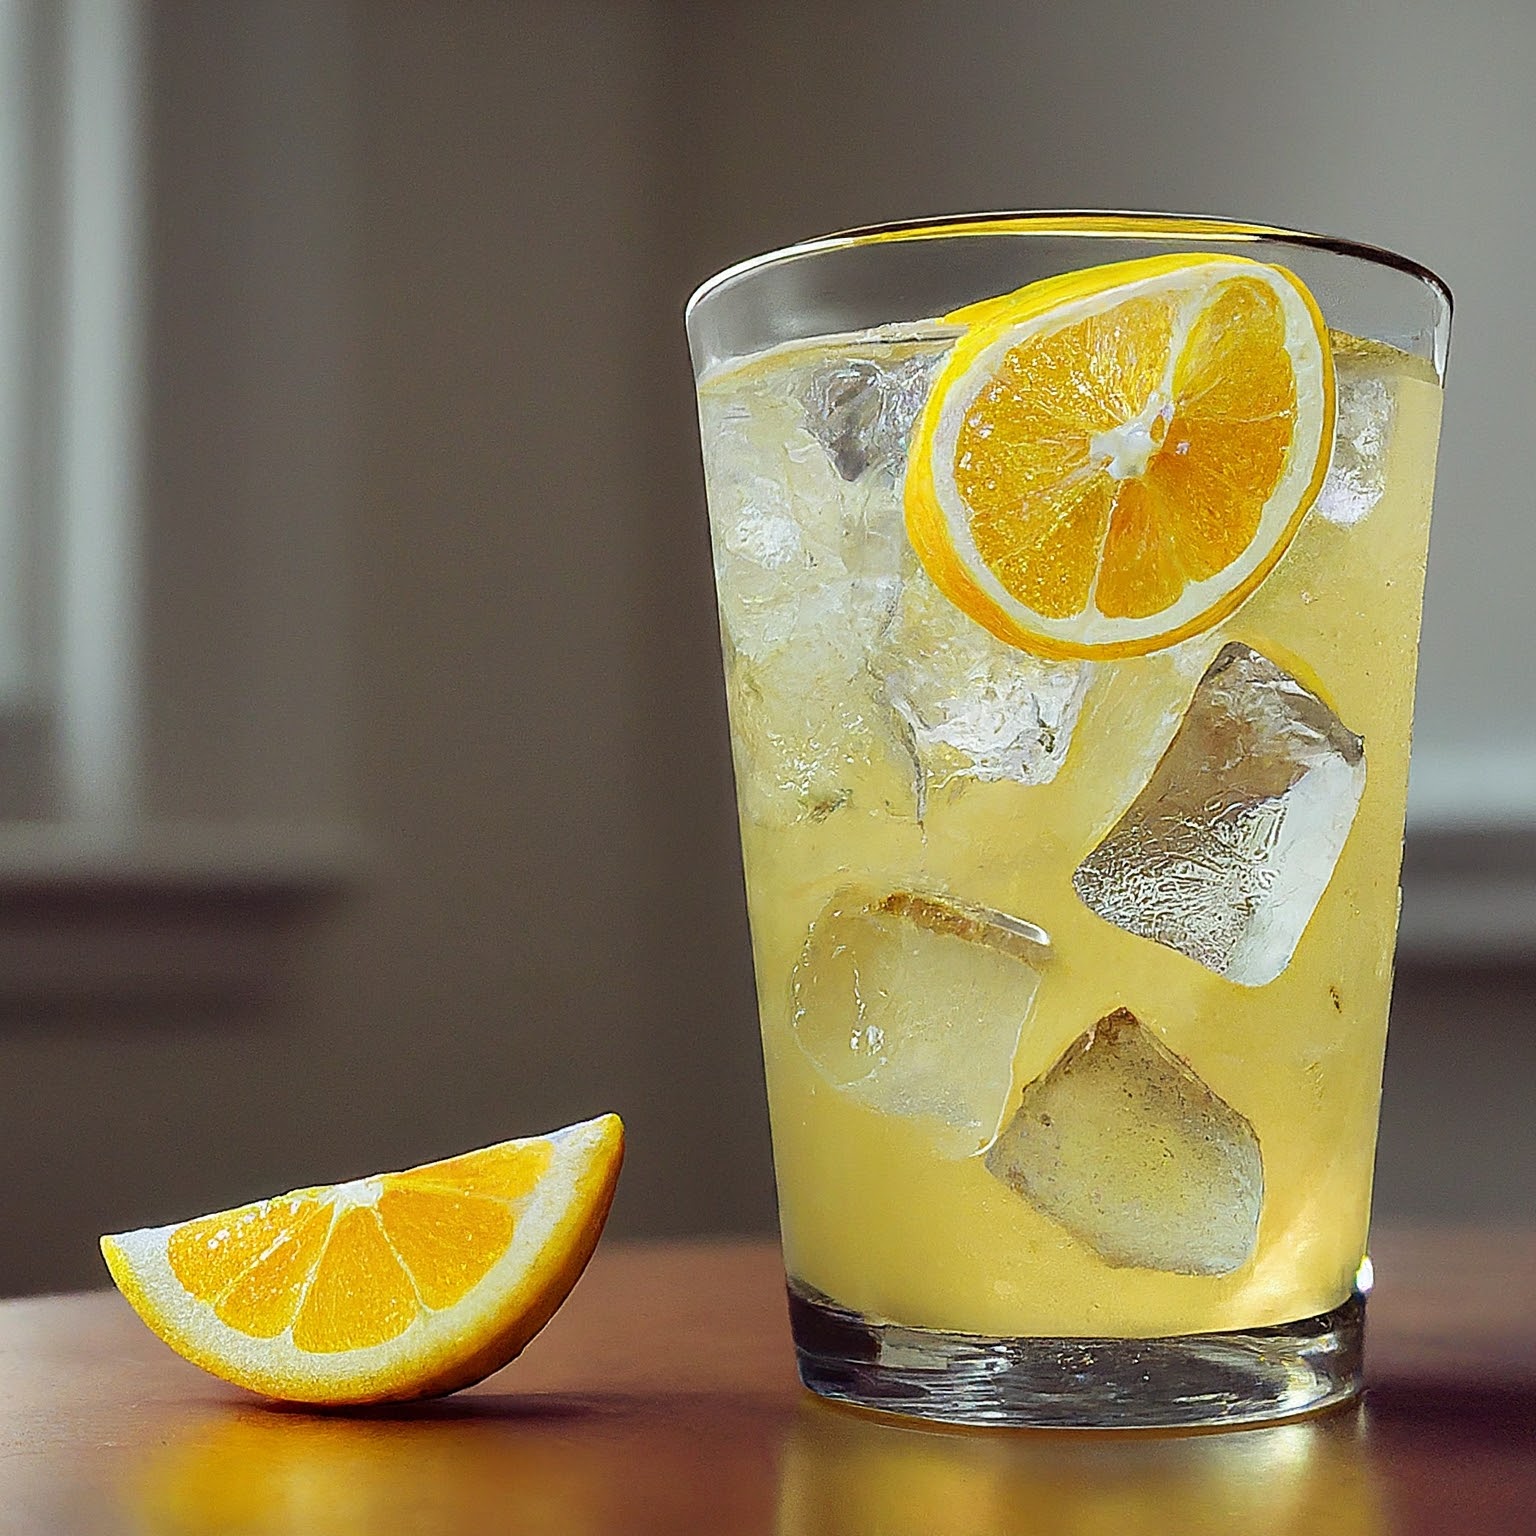 Best Lemonade Recipe